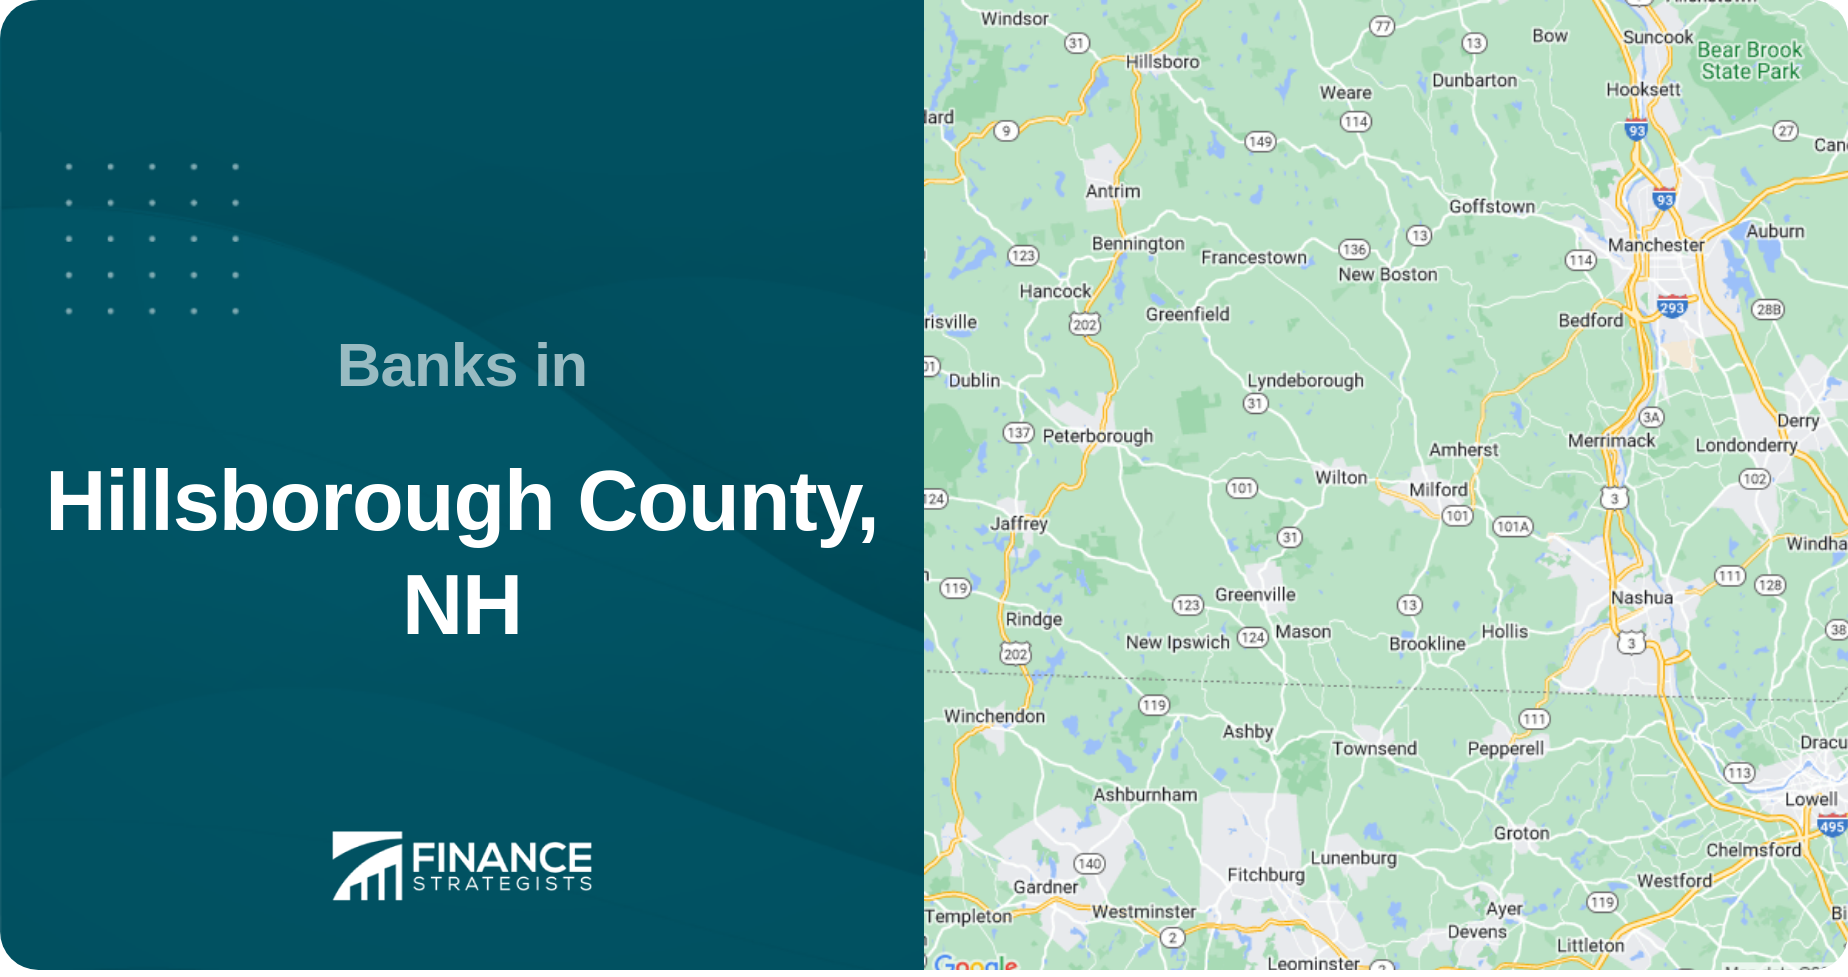 Banks in Hillsborough County, NH